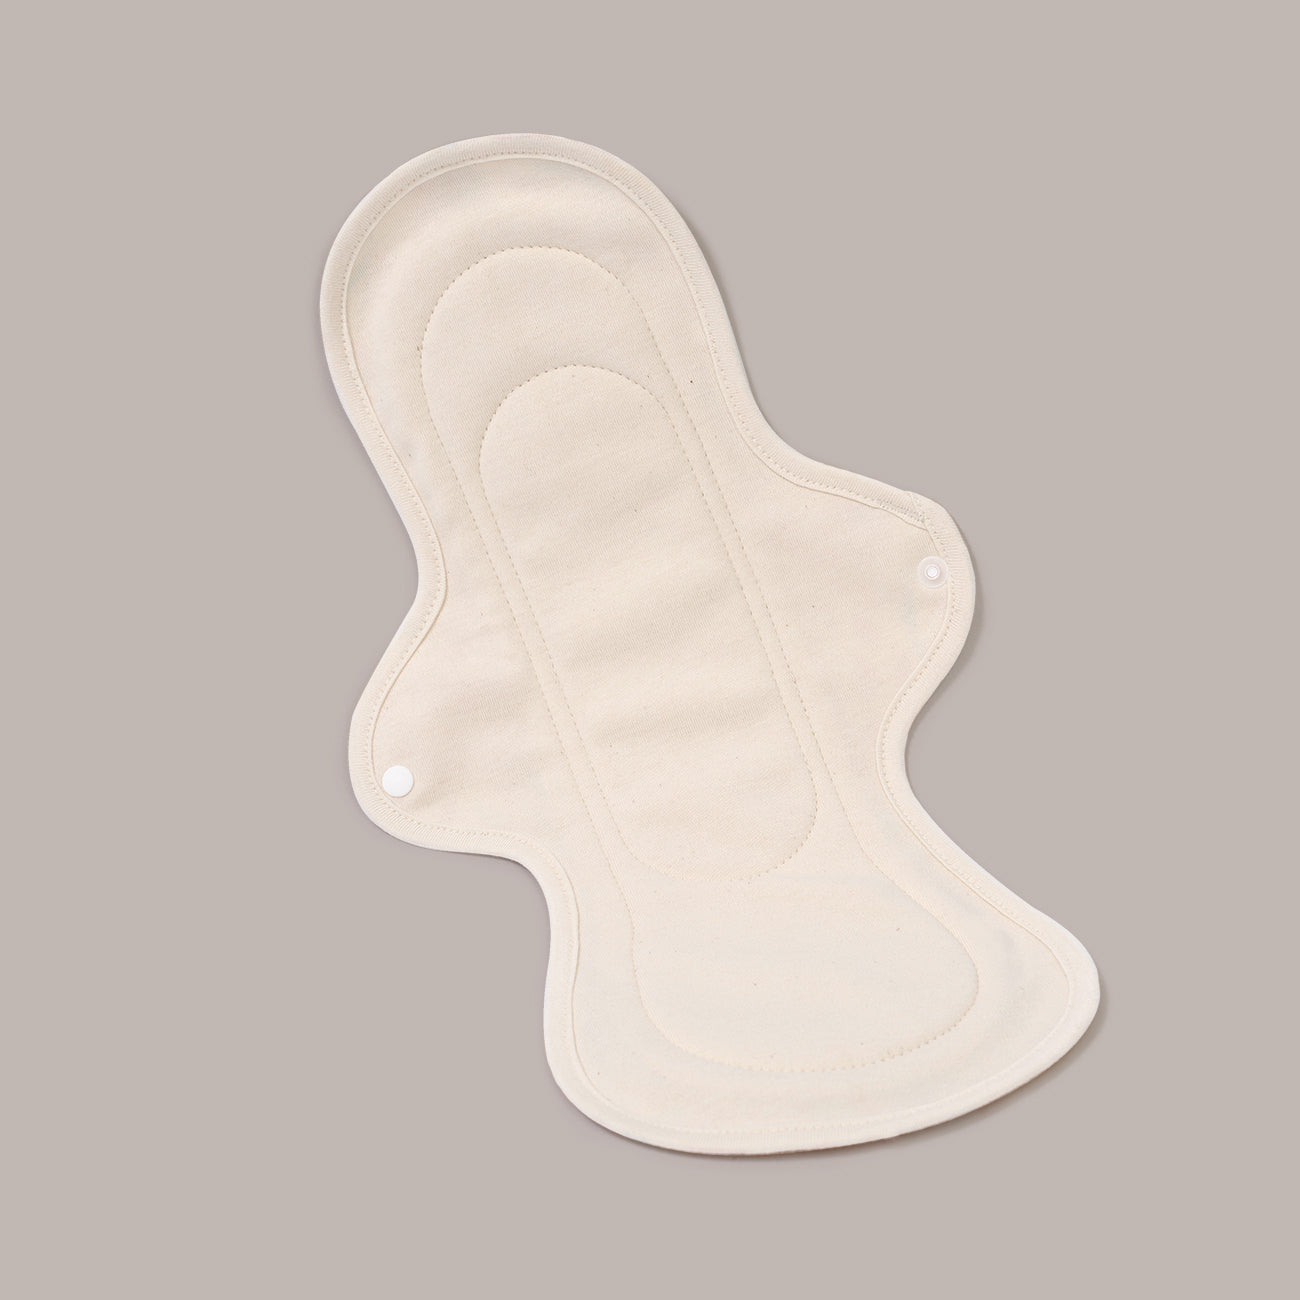 Farfi Menstrual Cloth Pad Multi-Purpose Strong Water Absorbent